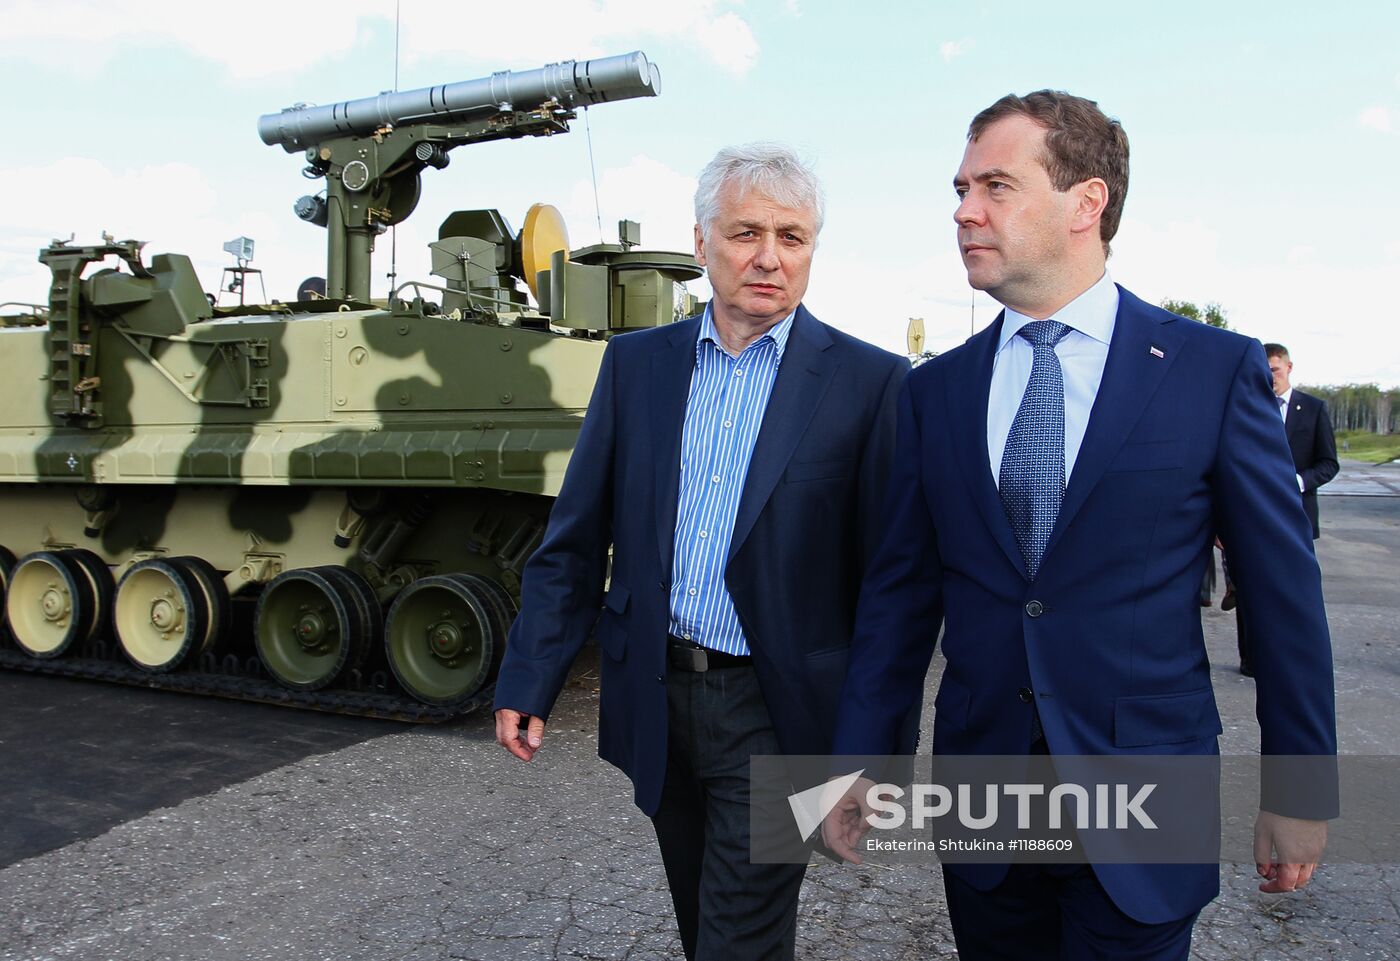 Dmitry Medvedev's visit to Kolomna